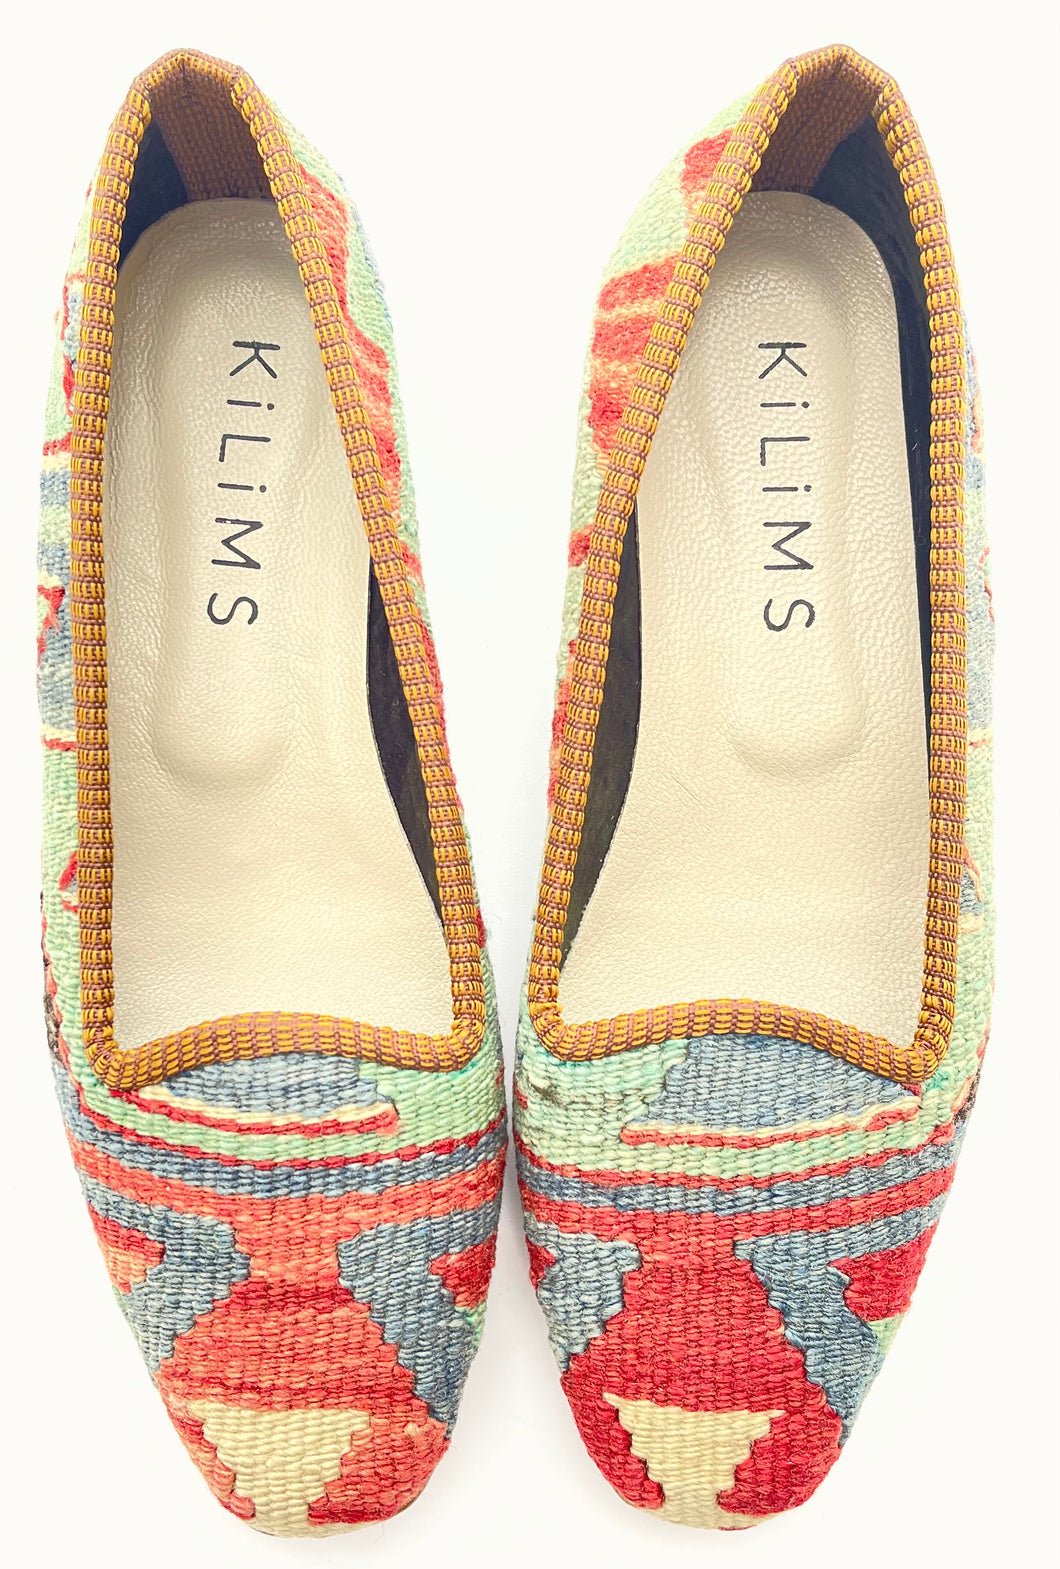 Cora Women's Kilim Slippers size 41 (US size 11)